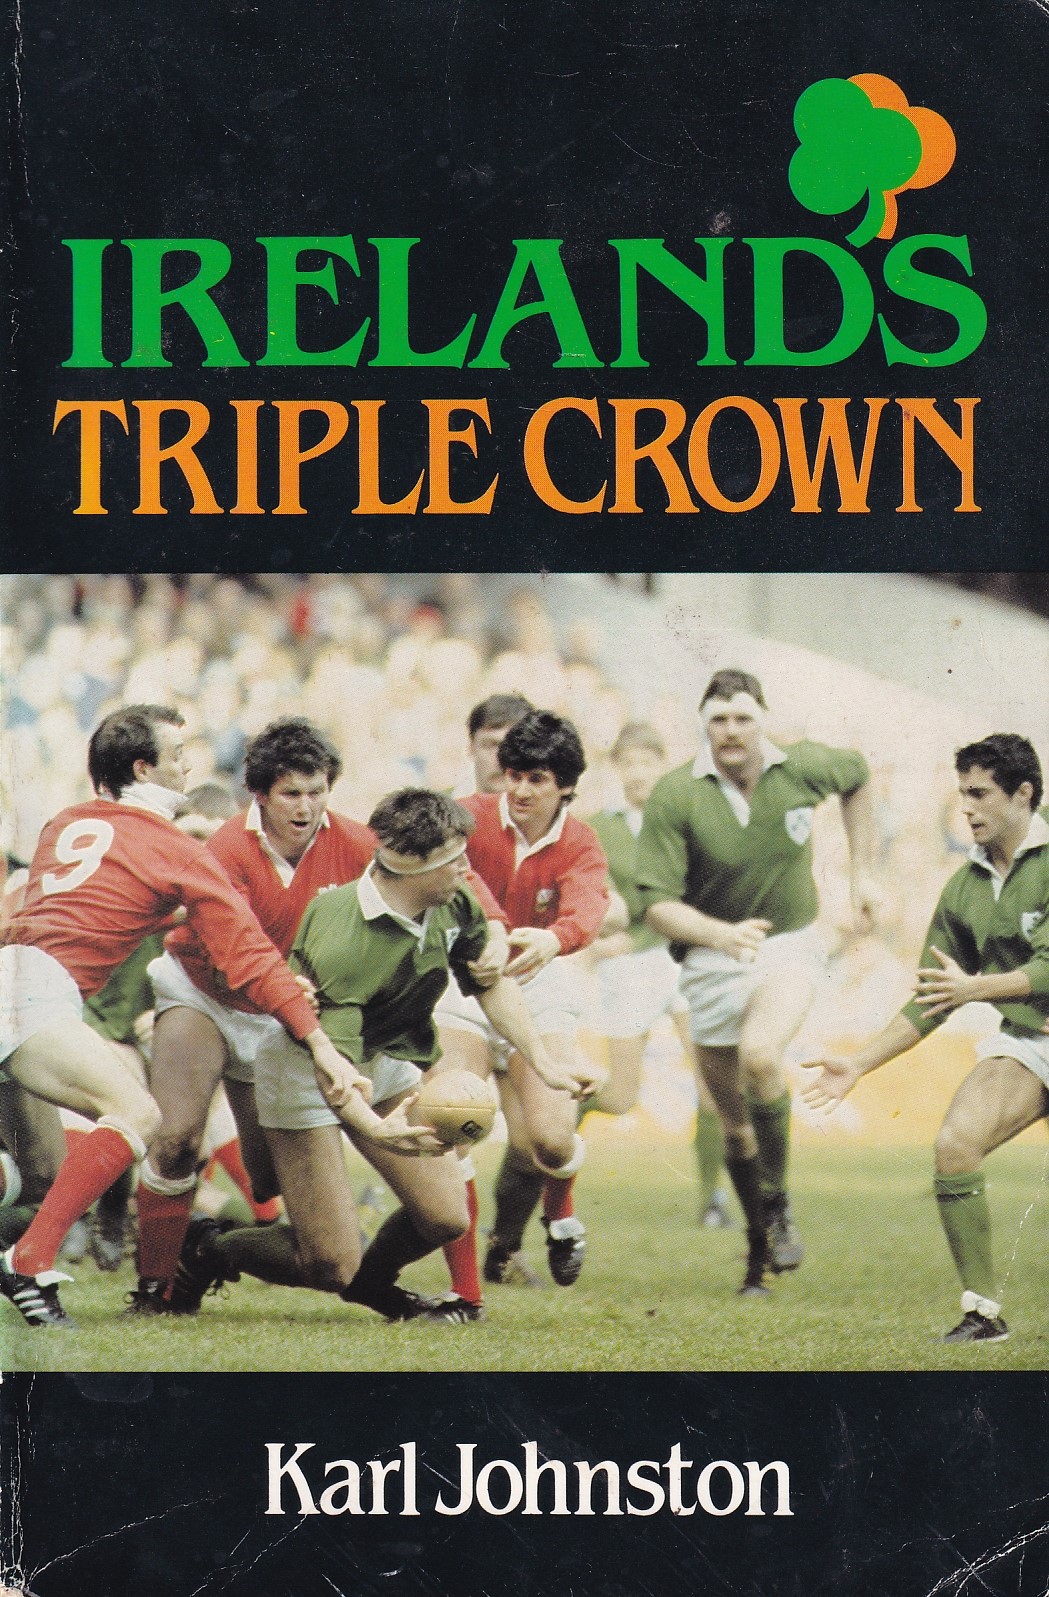 Ireland’s Triple Crown by Karl Johnston